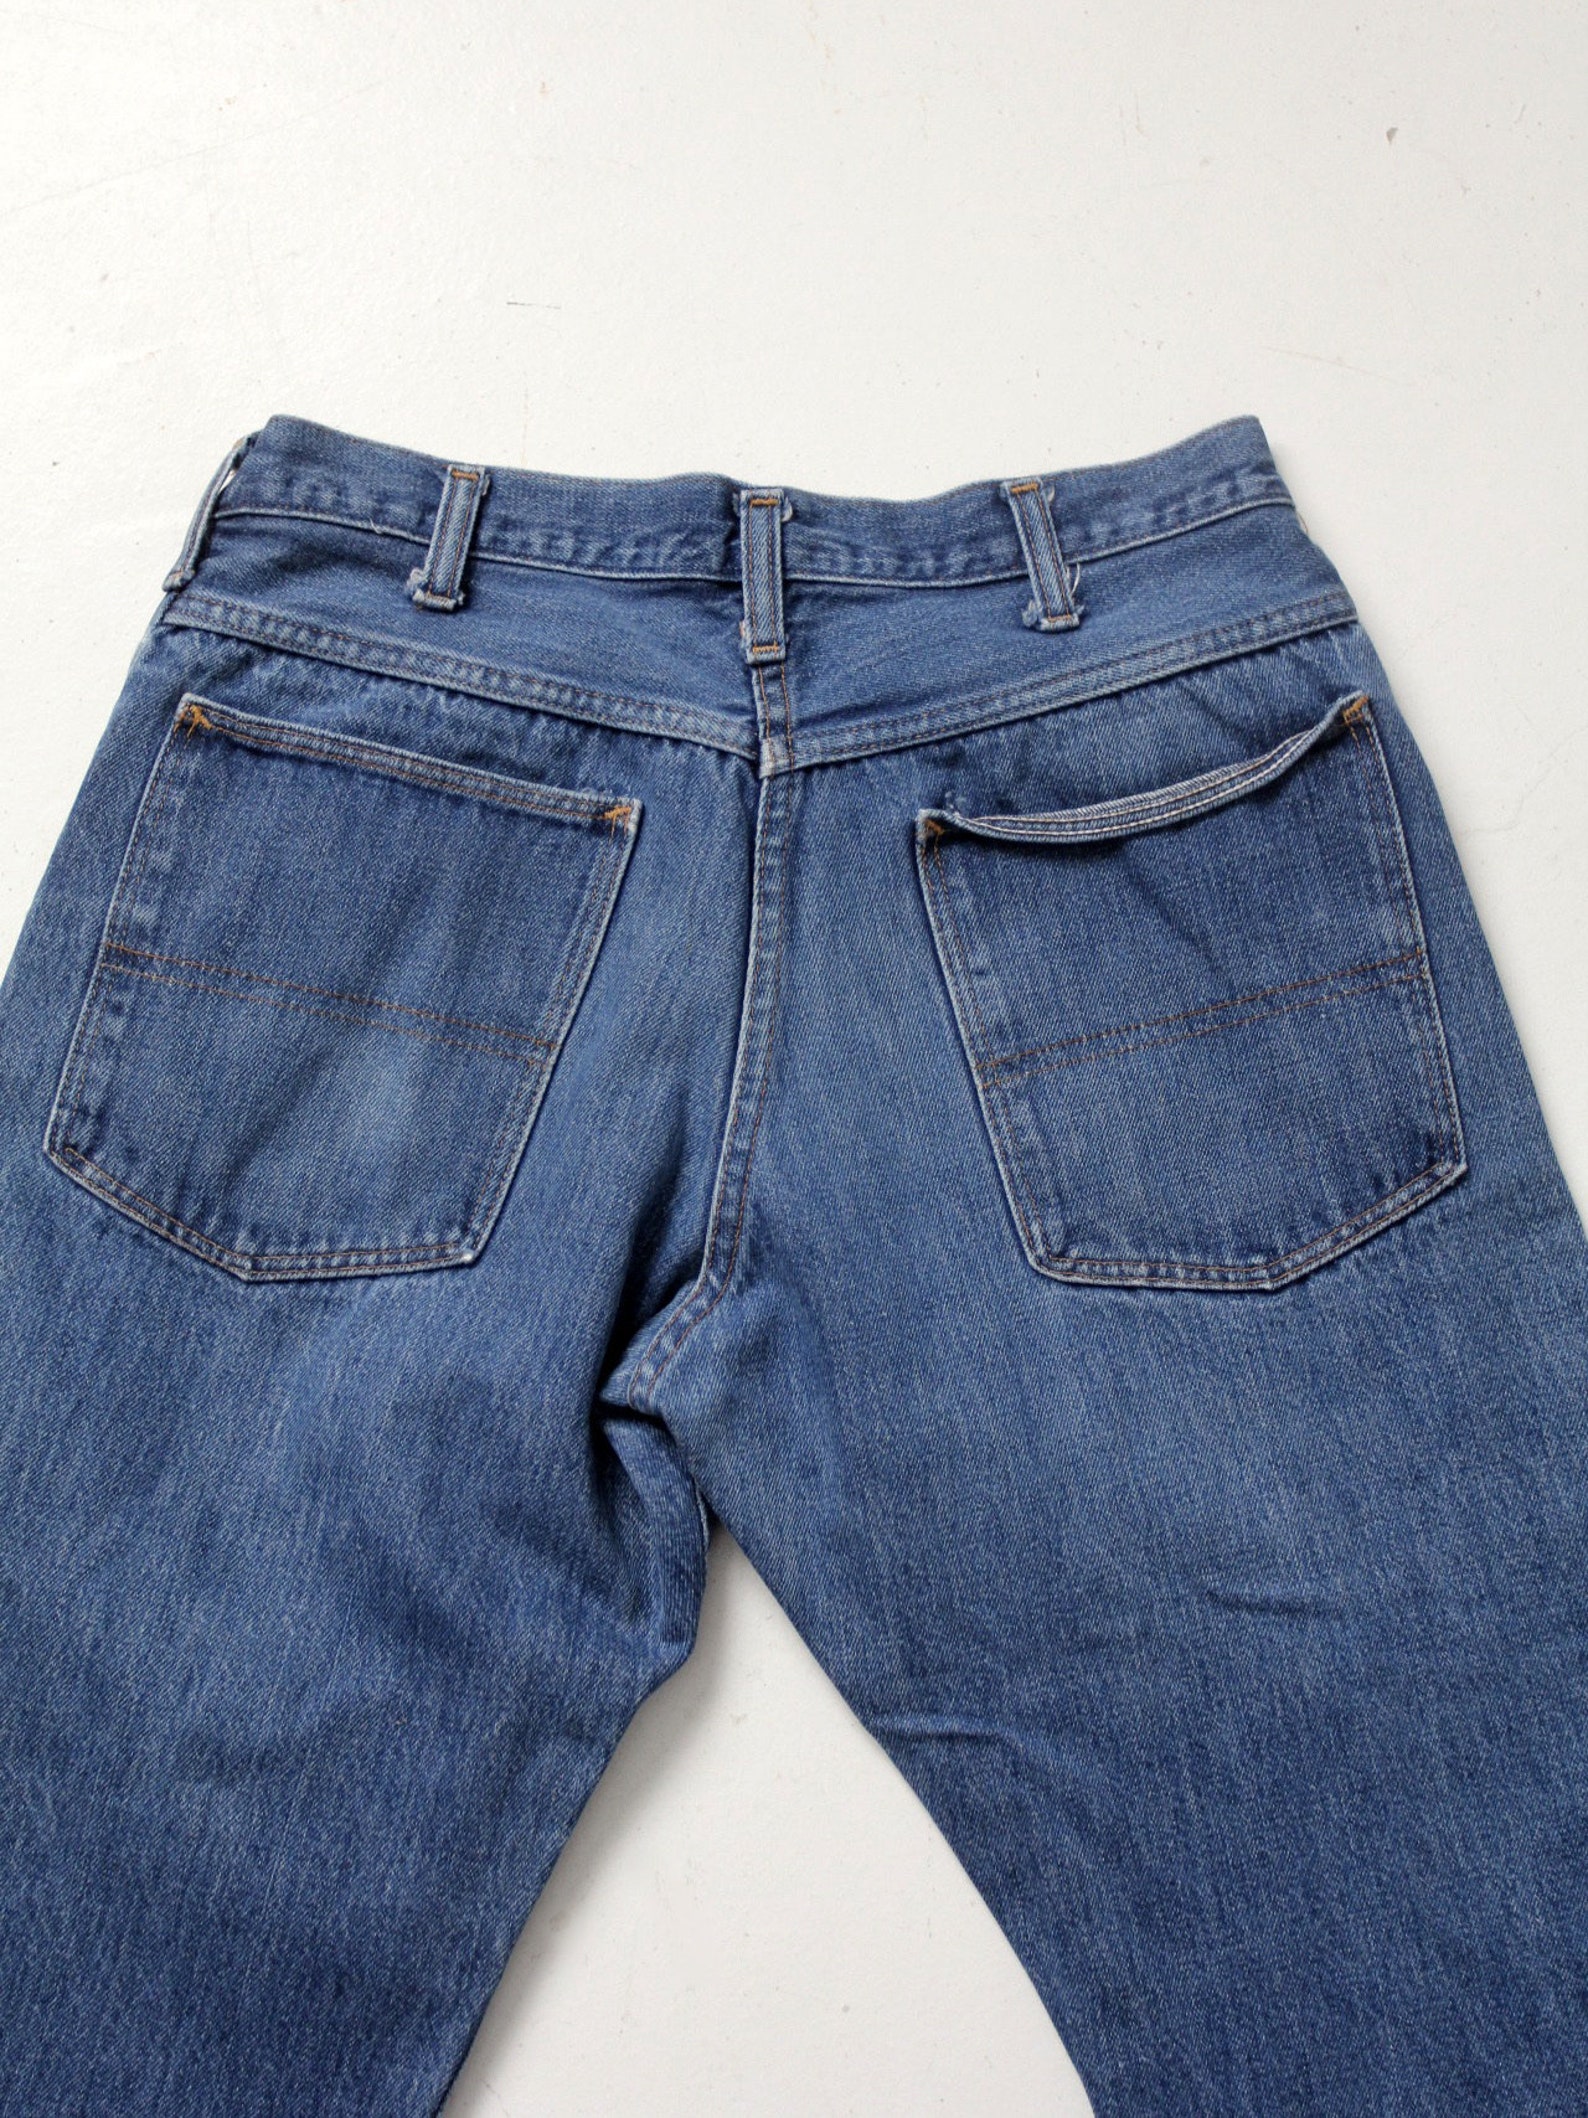 Vintage Jcpenney Denim Jeans 31 X 28 - Etsy